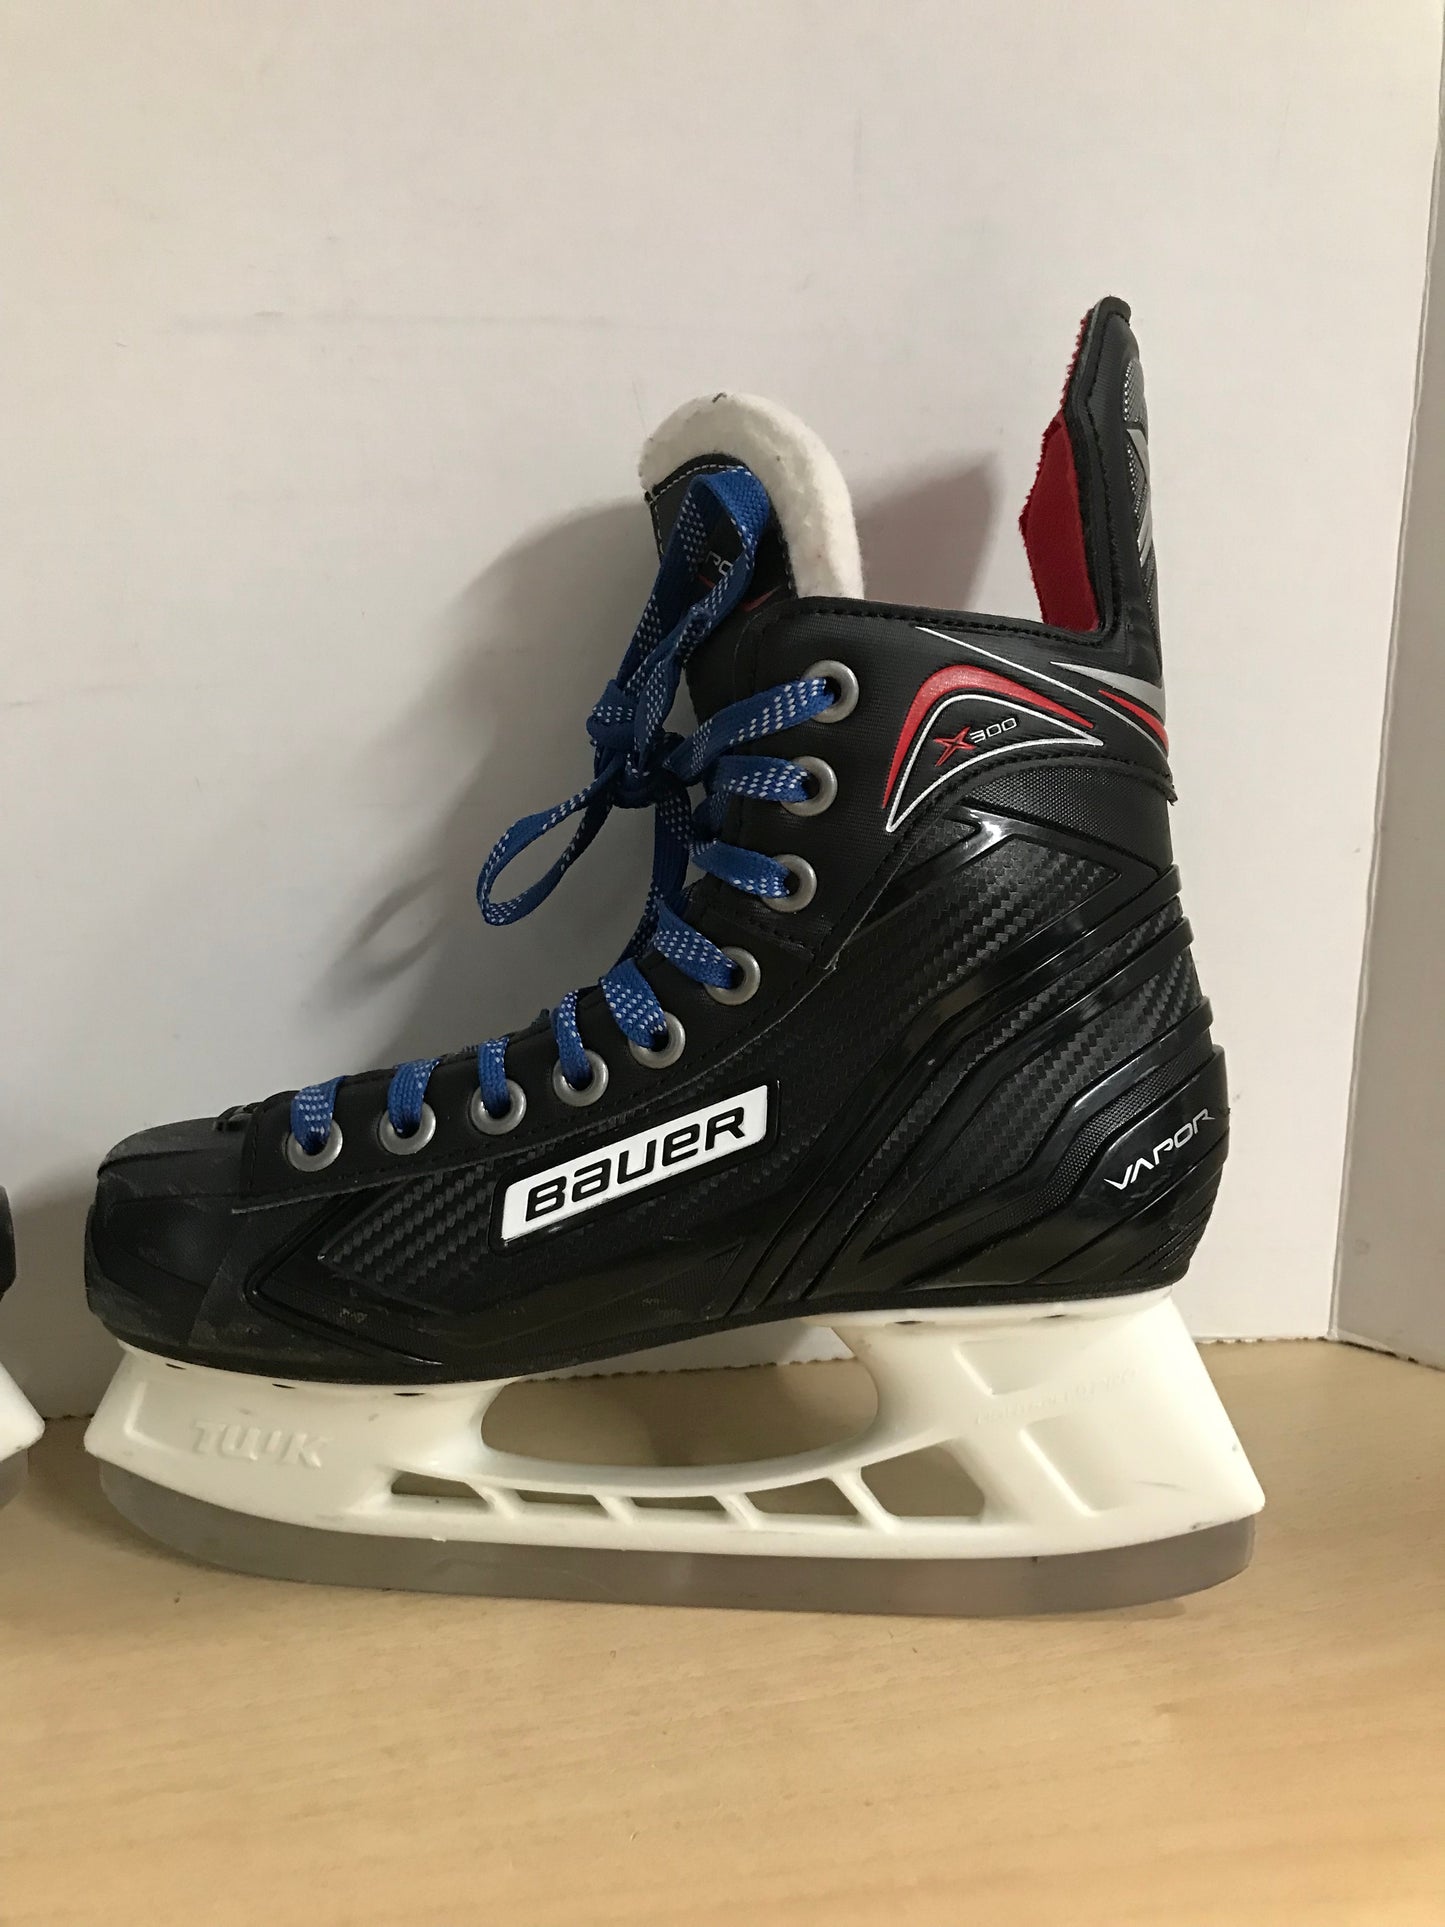 Hockey Skates Child Size 5 Shoe Size Bauer Vapor X.300 Junior As New Excellent